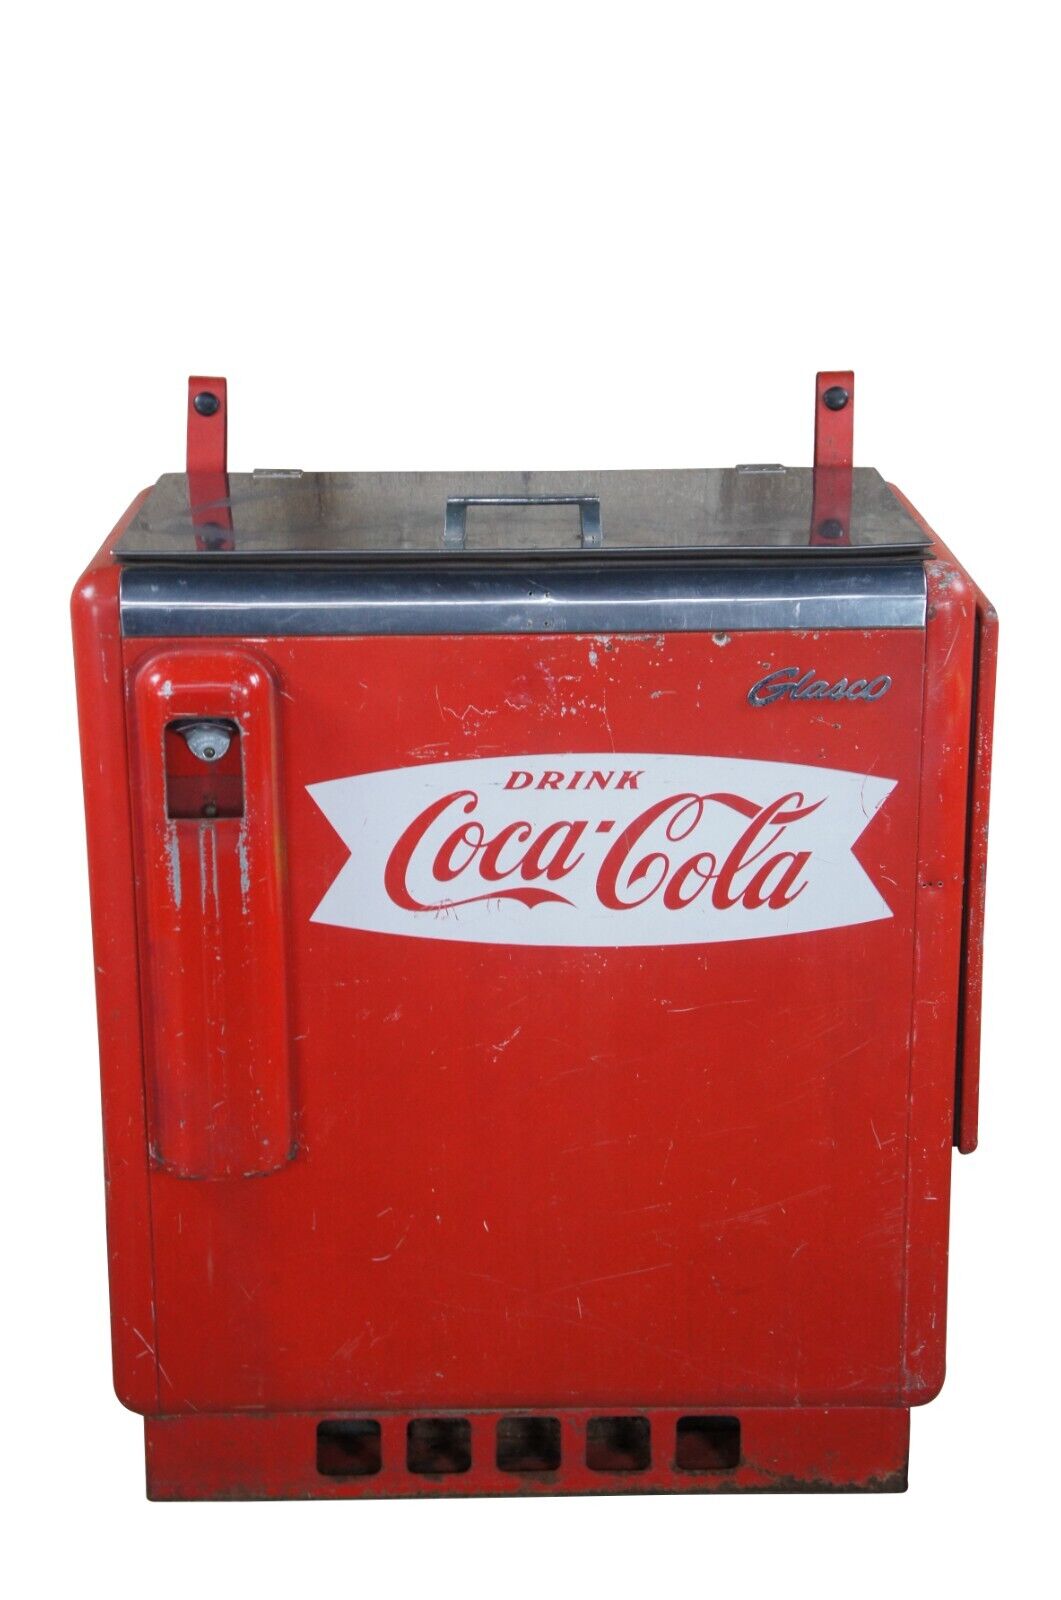 Mid Century Glasco GBV 50 Slider Coca-Cola Cooler Refrigerator Vending Machine